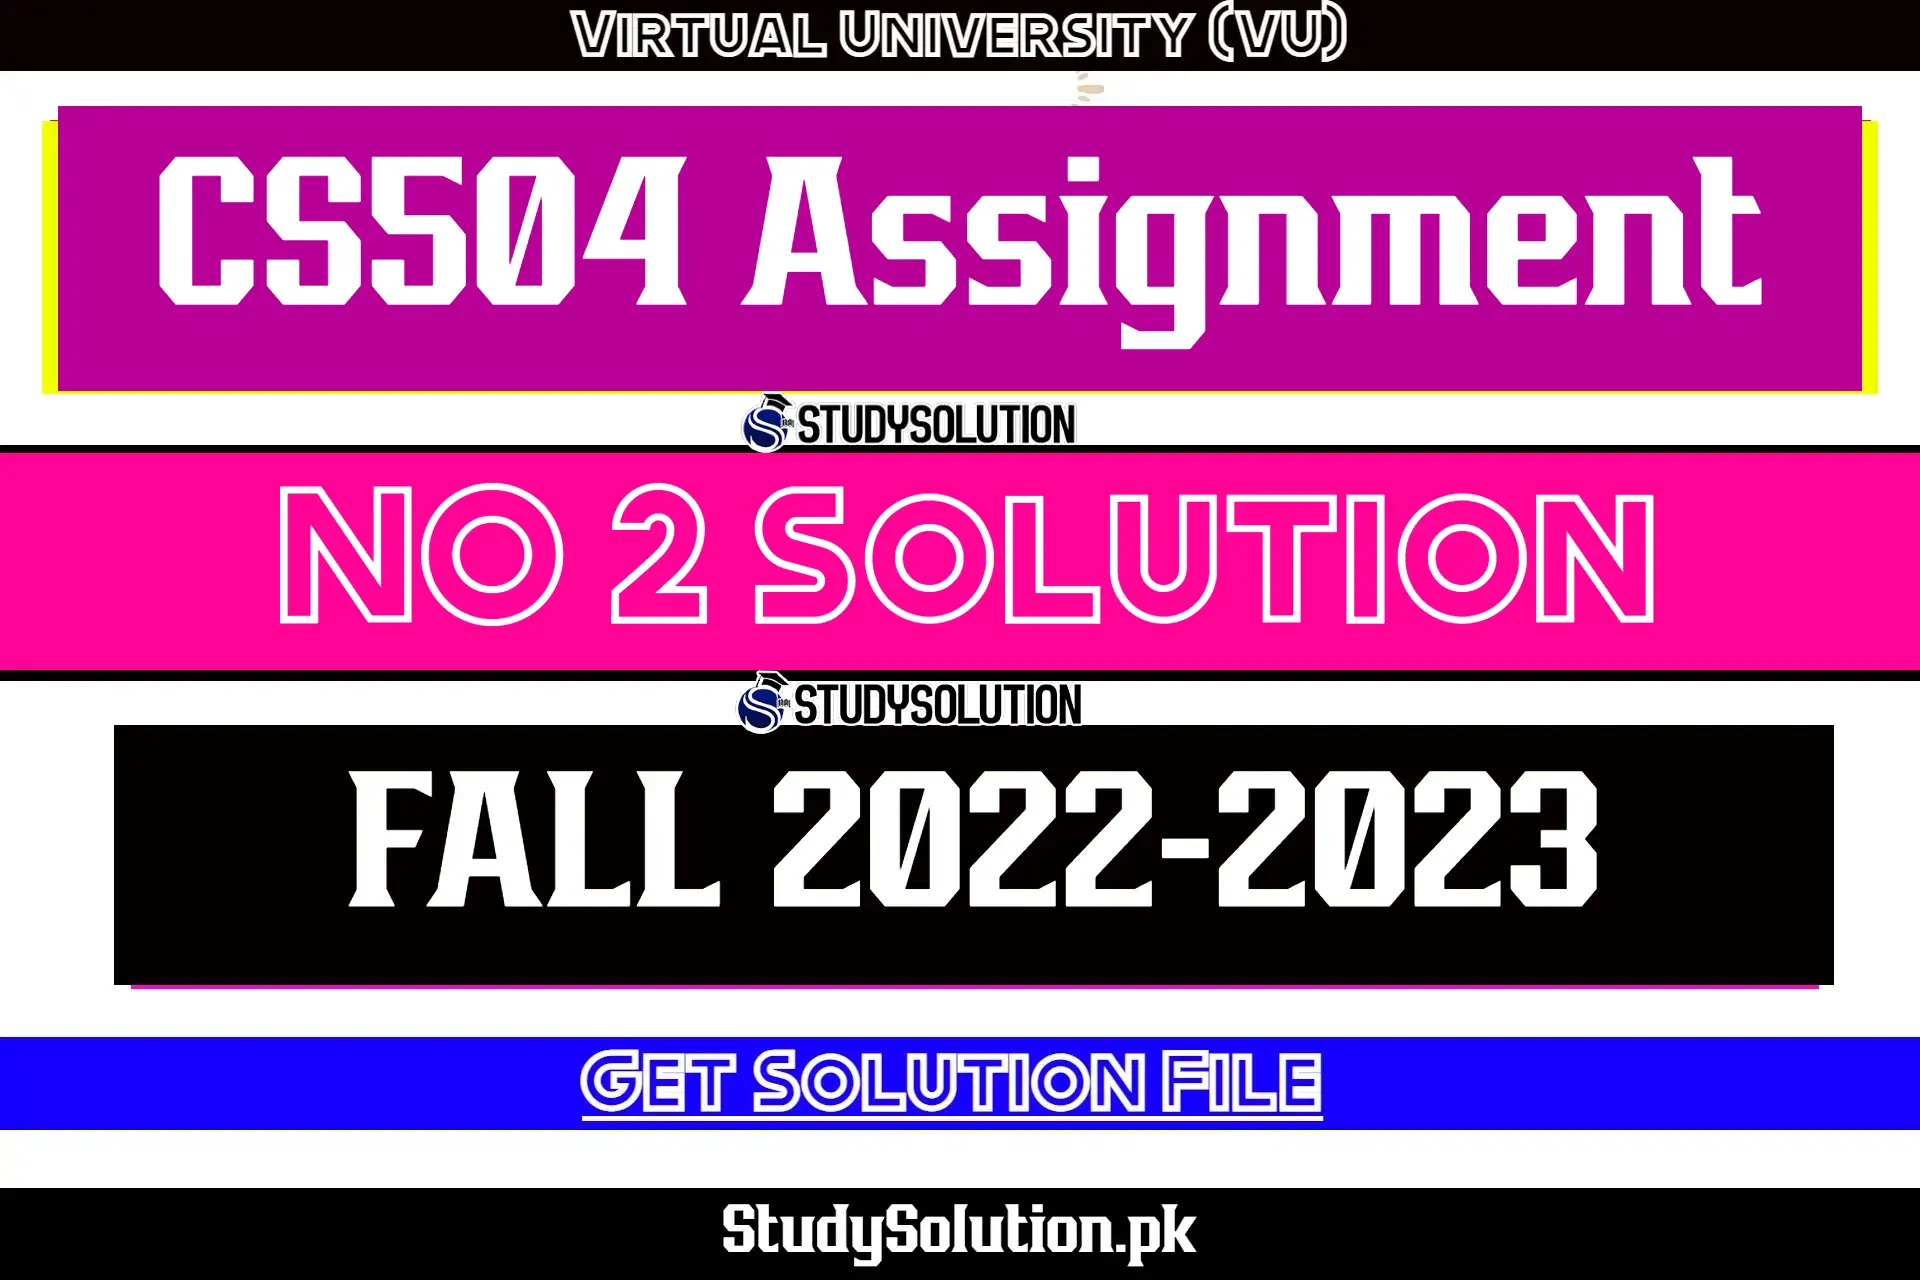 CS504 Assignment No 2 Solution Fall 2022